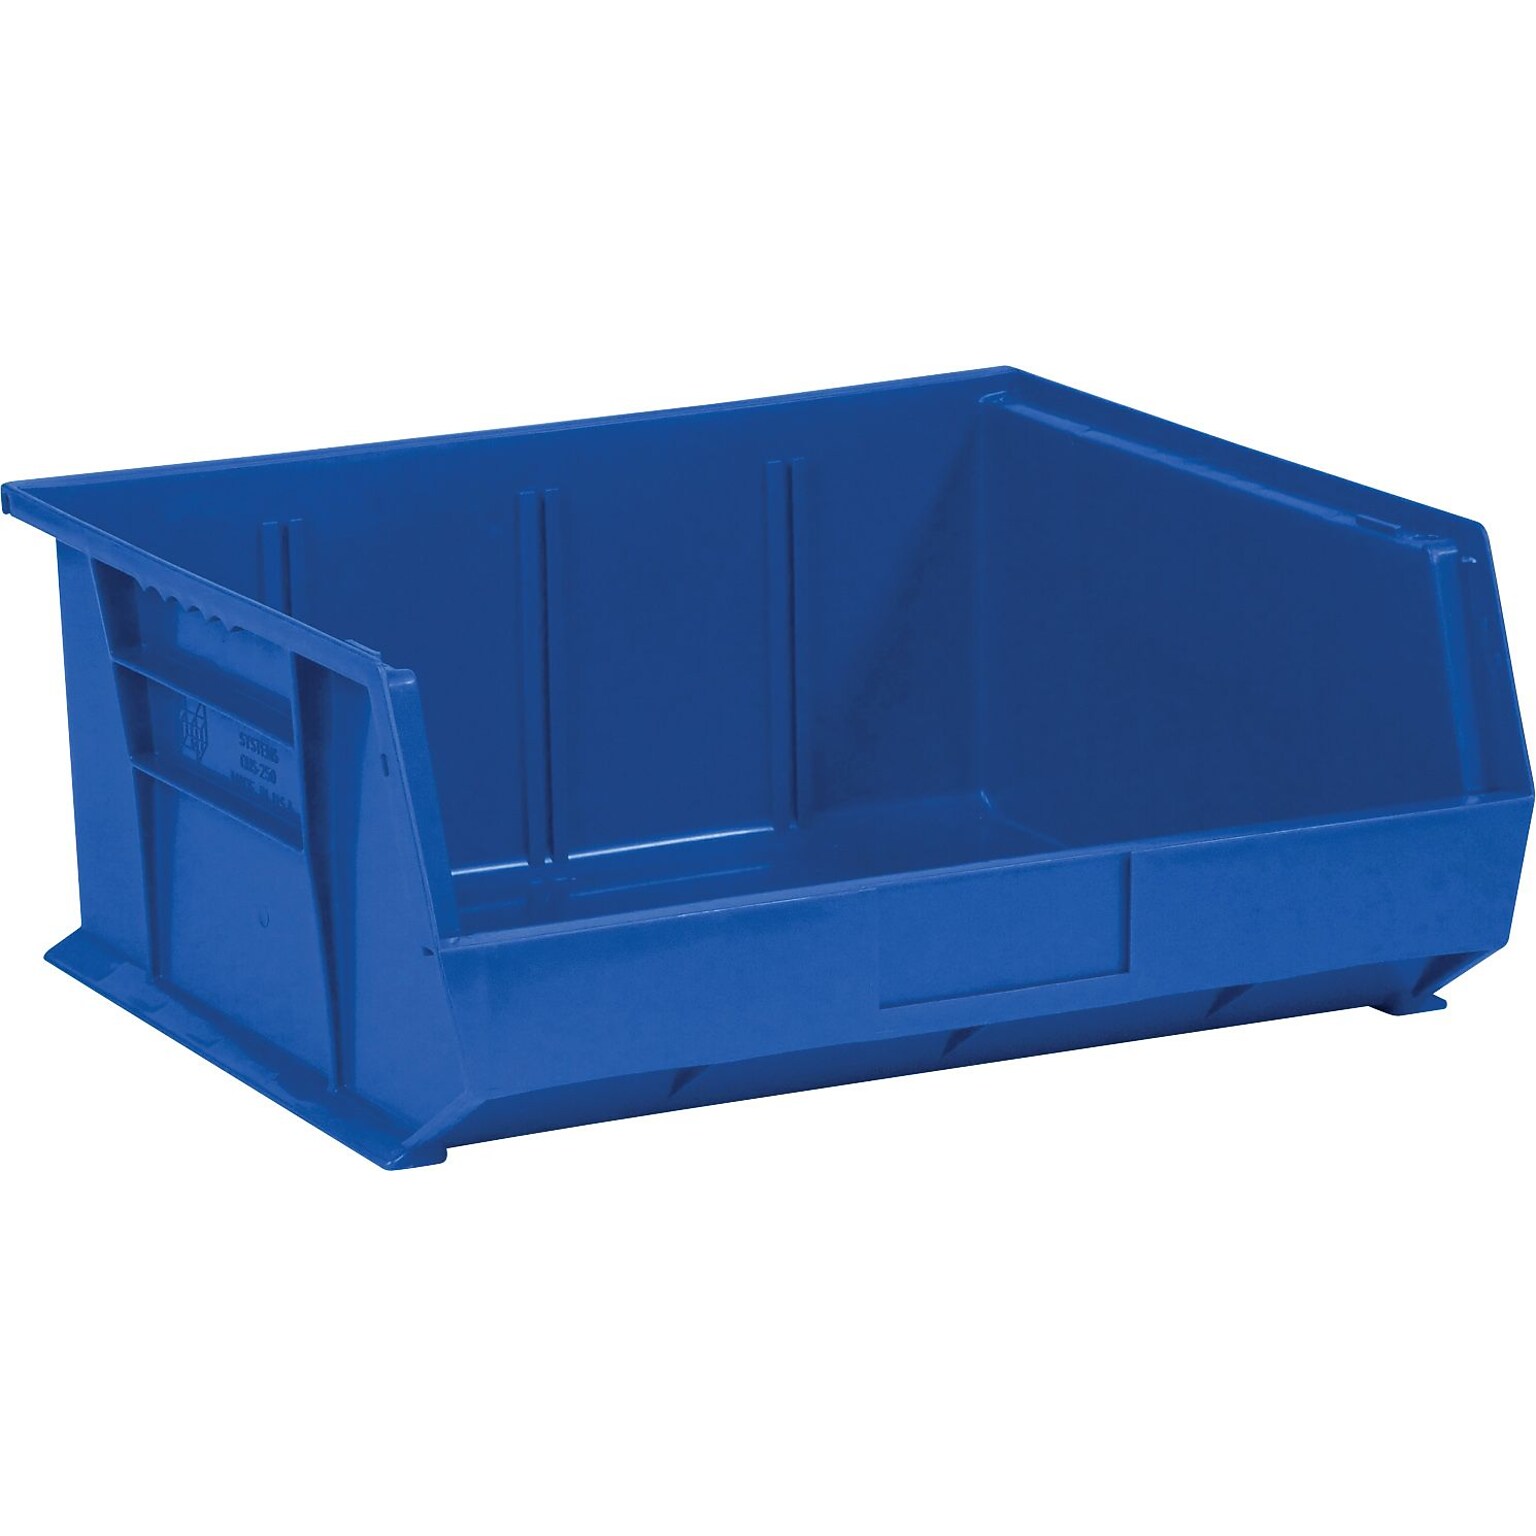 Quill Brand Plastic Stack and Hang Bin, Blue, 6/Carton (BINPS103R)